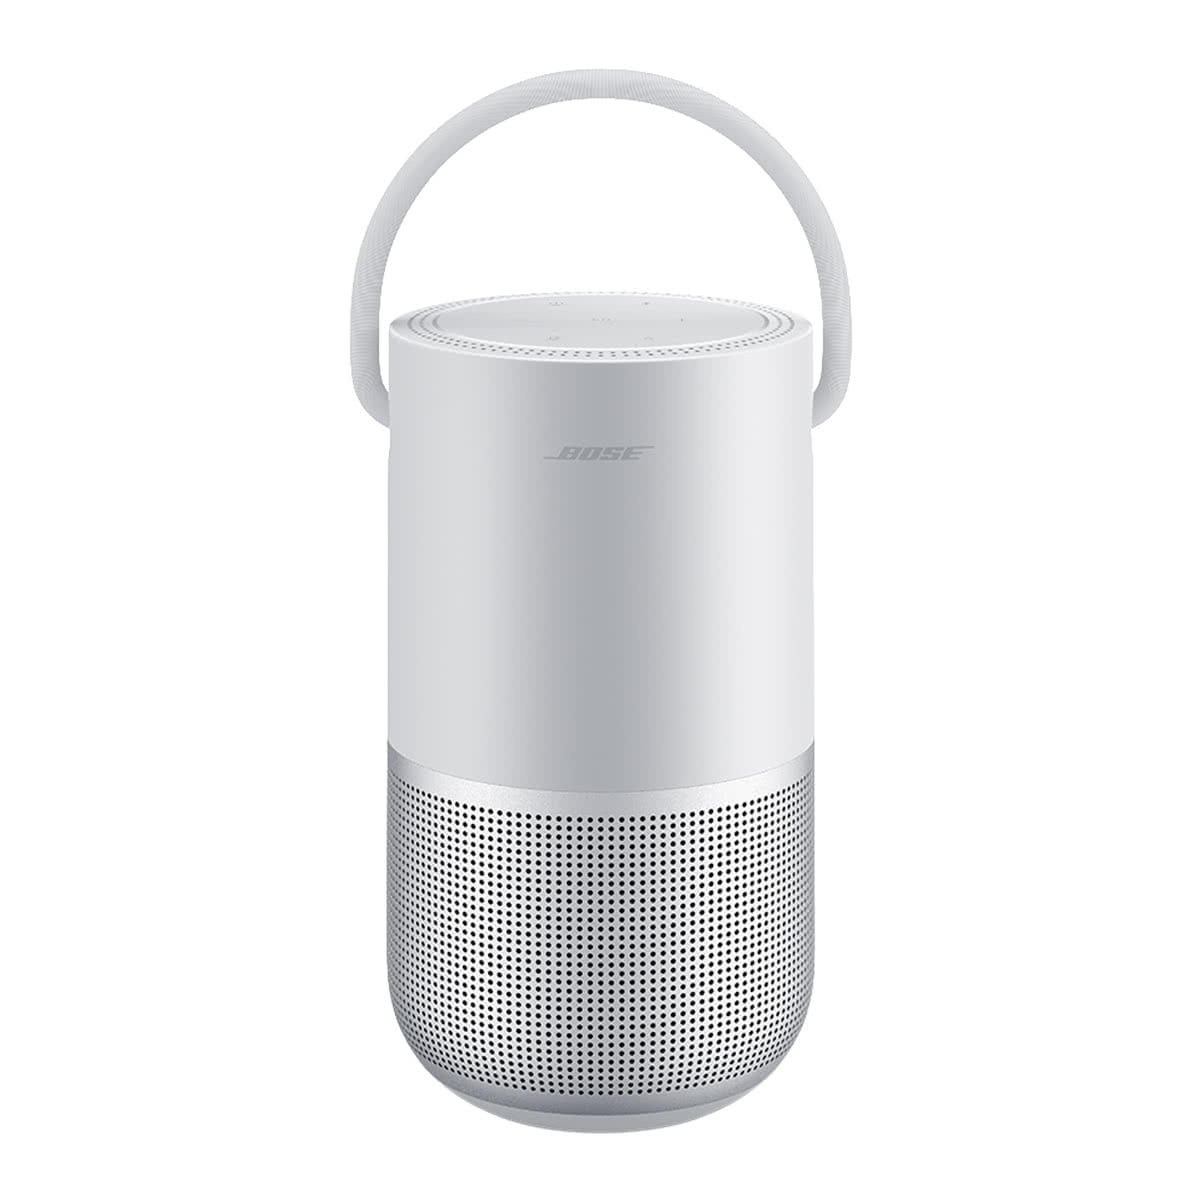 Bose Portable Smart Speaker (Luxe Silver)